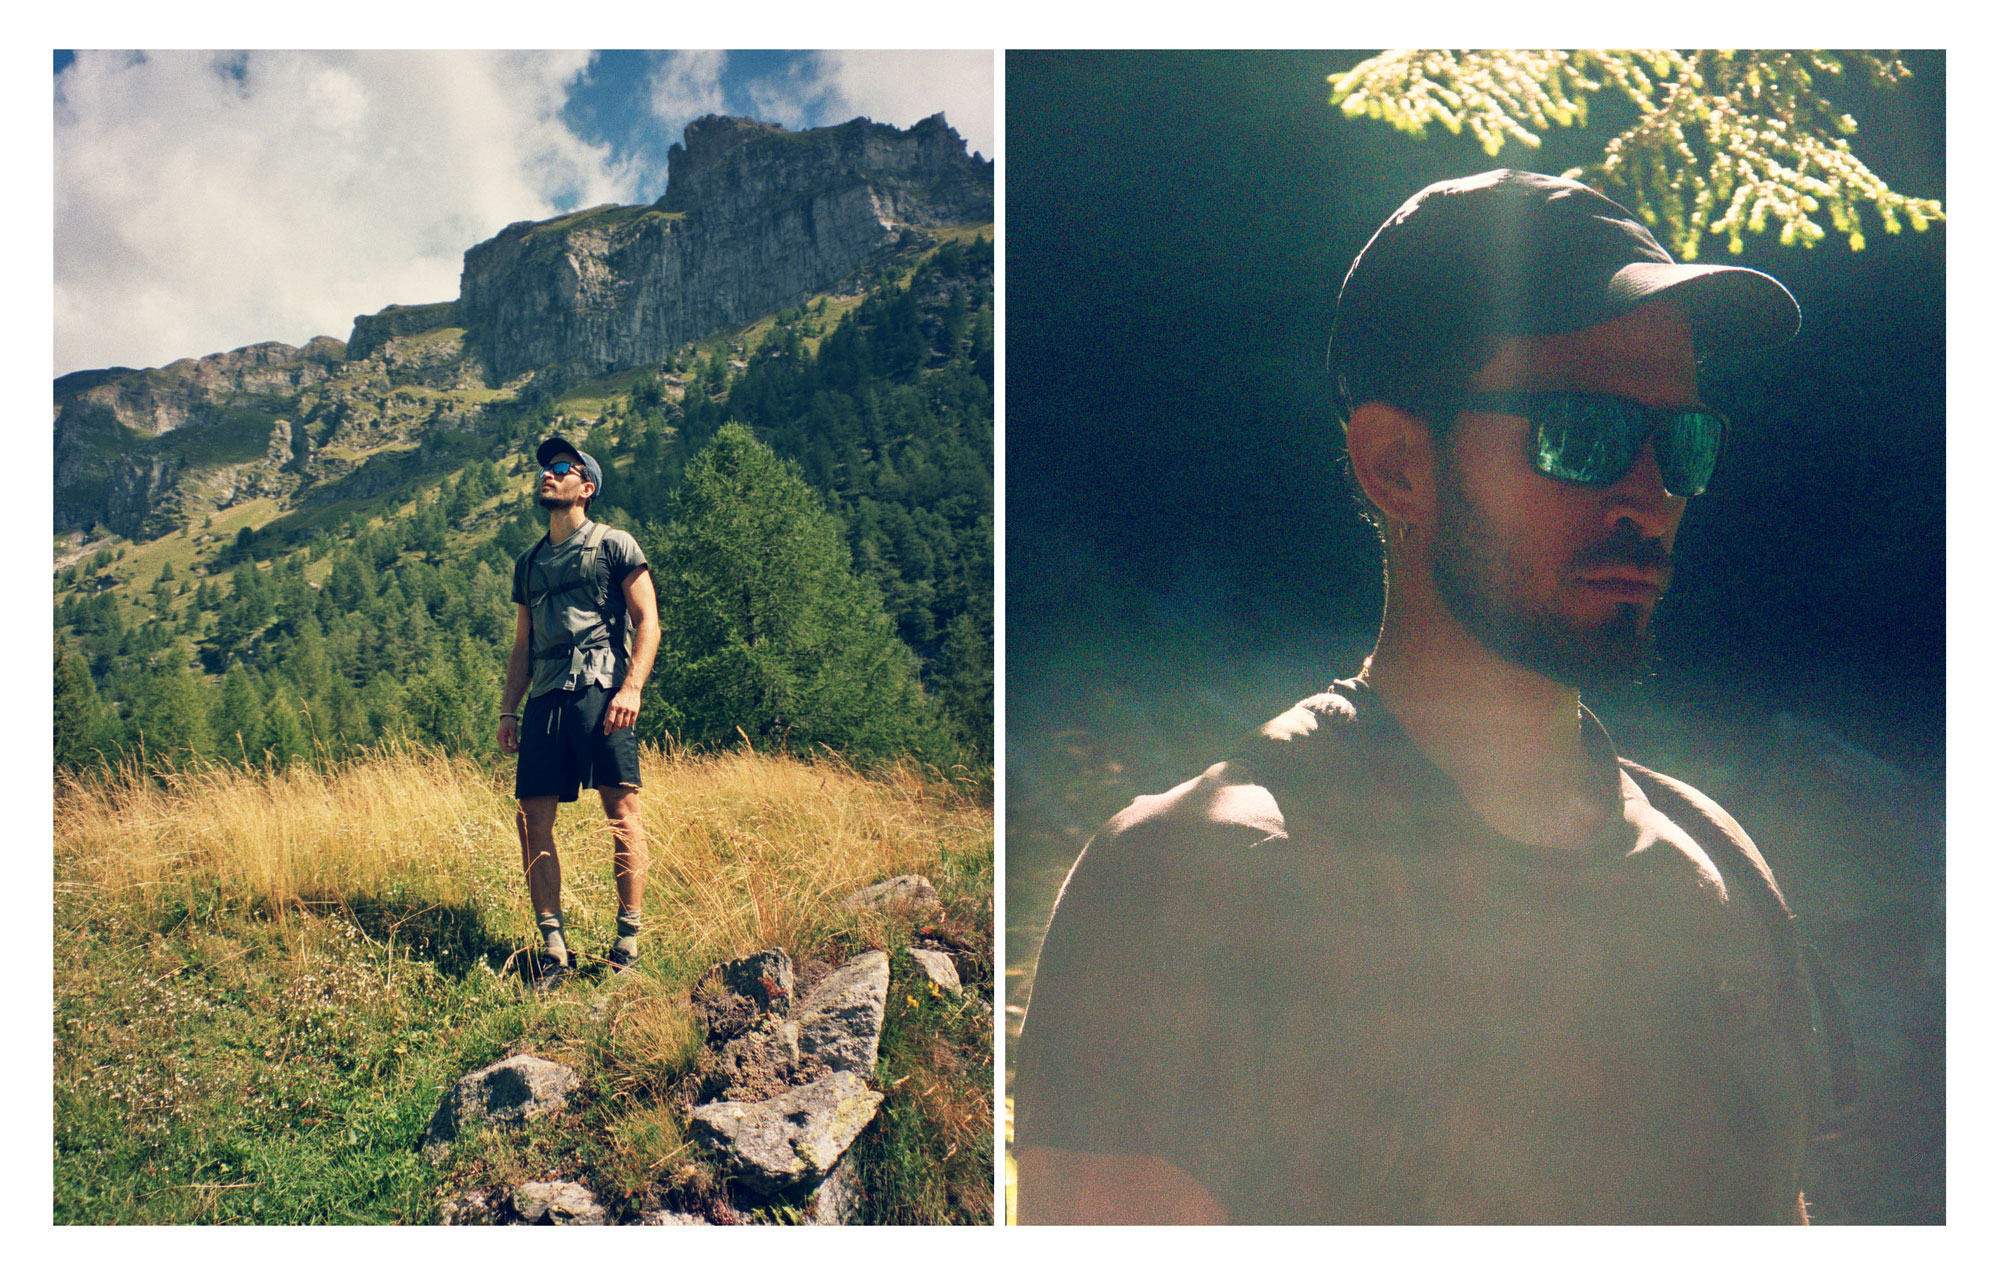 Foppiano to Alpe Solcio _ Trekking